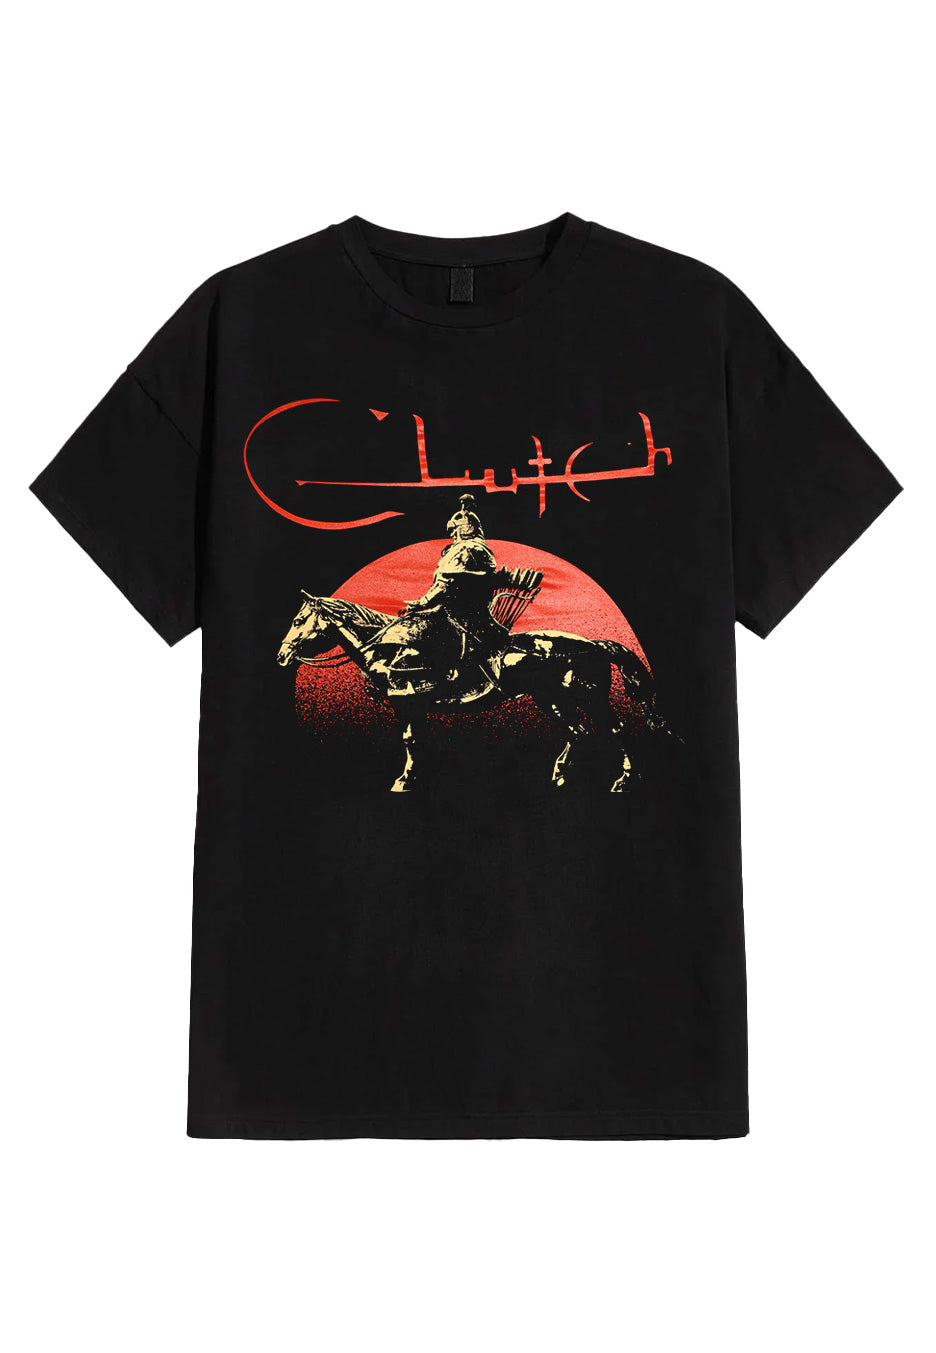 Clutch - Horserider - T-Shirt